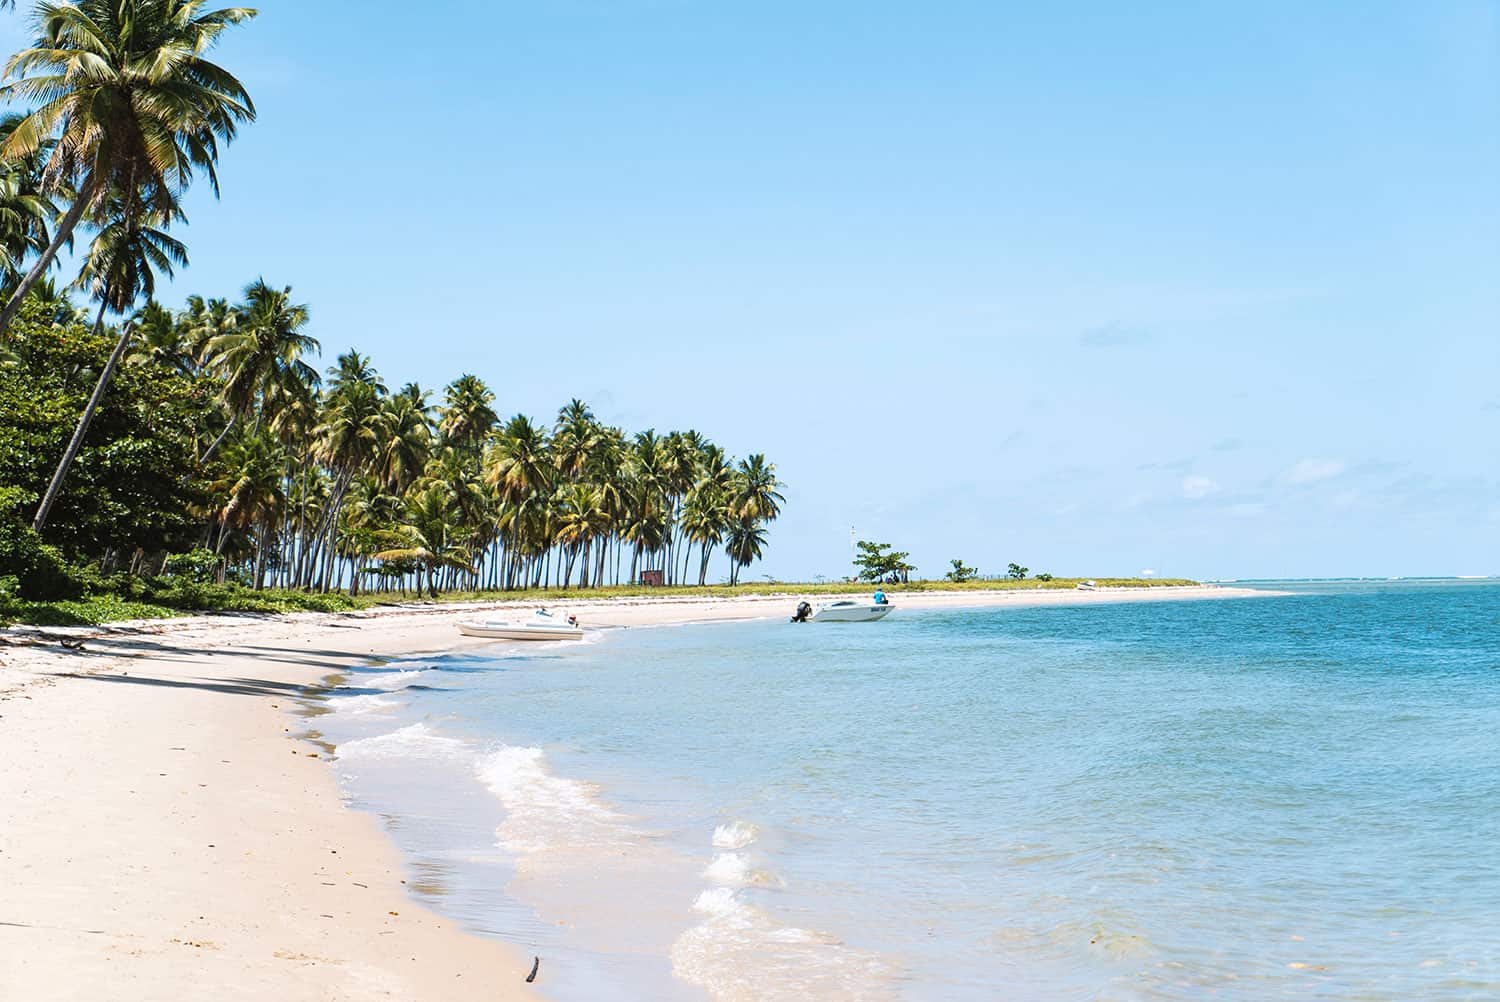 Beautiful beaches in the Caribbean.